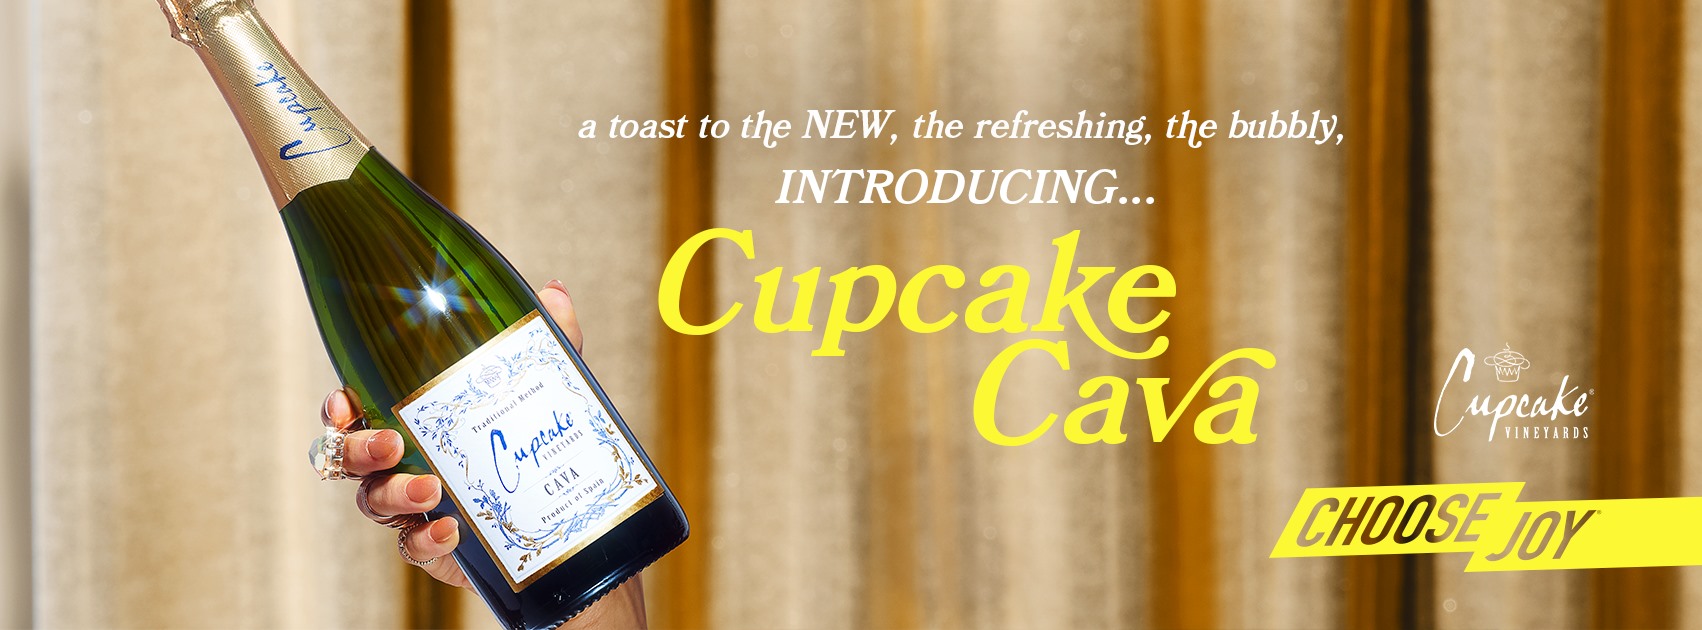 Celebrating Cupcake Cava